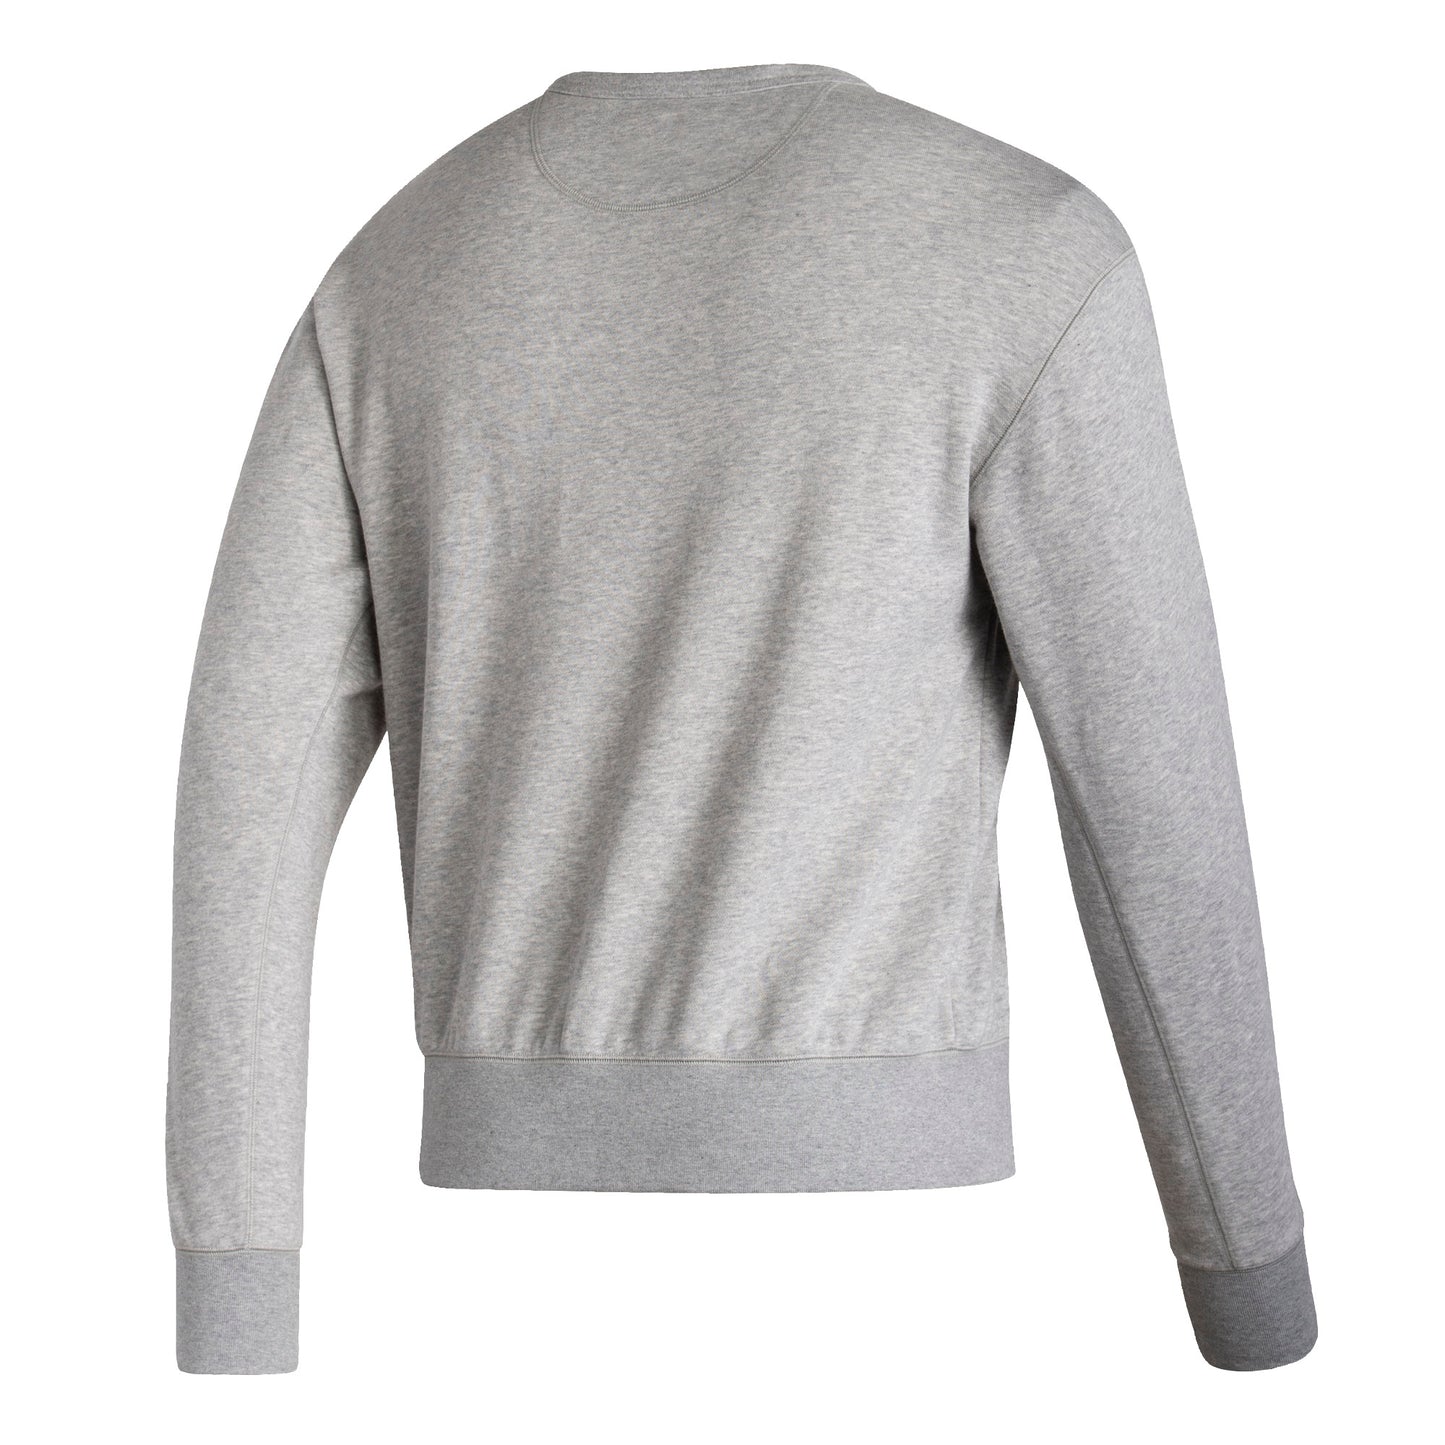 ADIDAS - ARCH Premium Vintage Sweatshirt - Athletic Grey